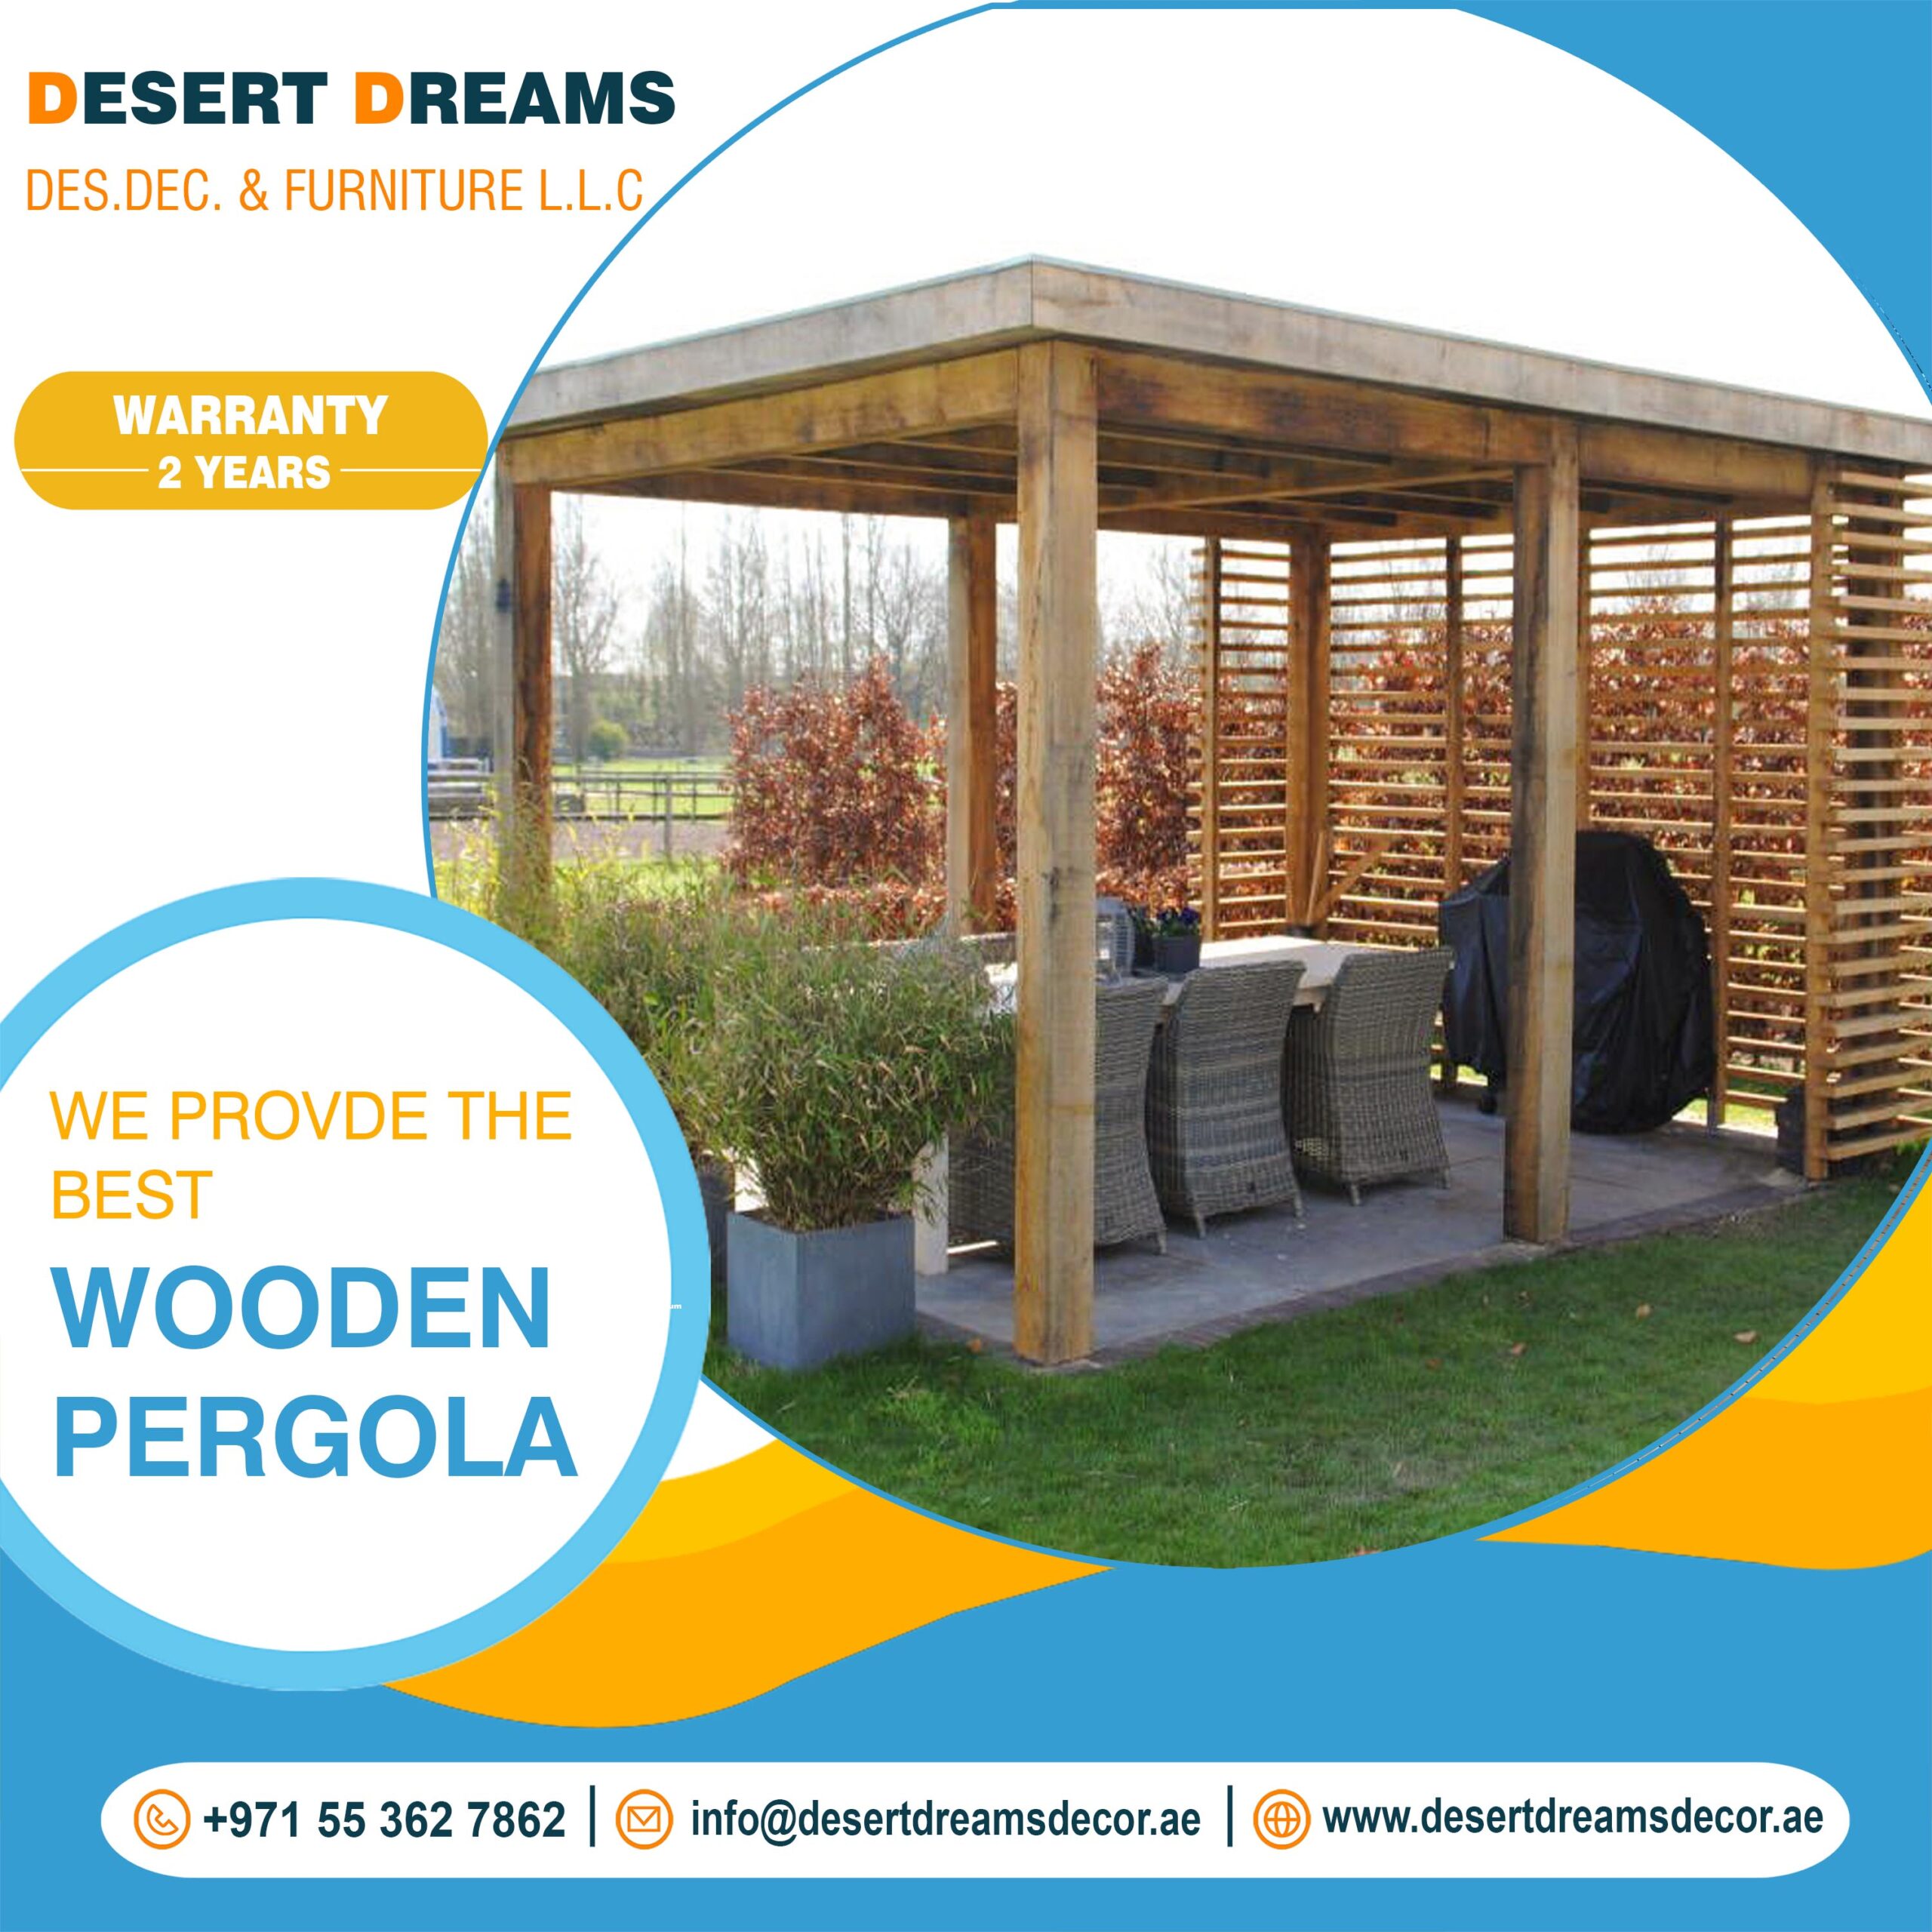 Wooden Pergola Suppliers in Dubai_Wooden Pergola Suppliers in Uae_Wooden Pergola Supplier in Abu Dhabi (3).jpg